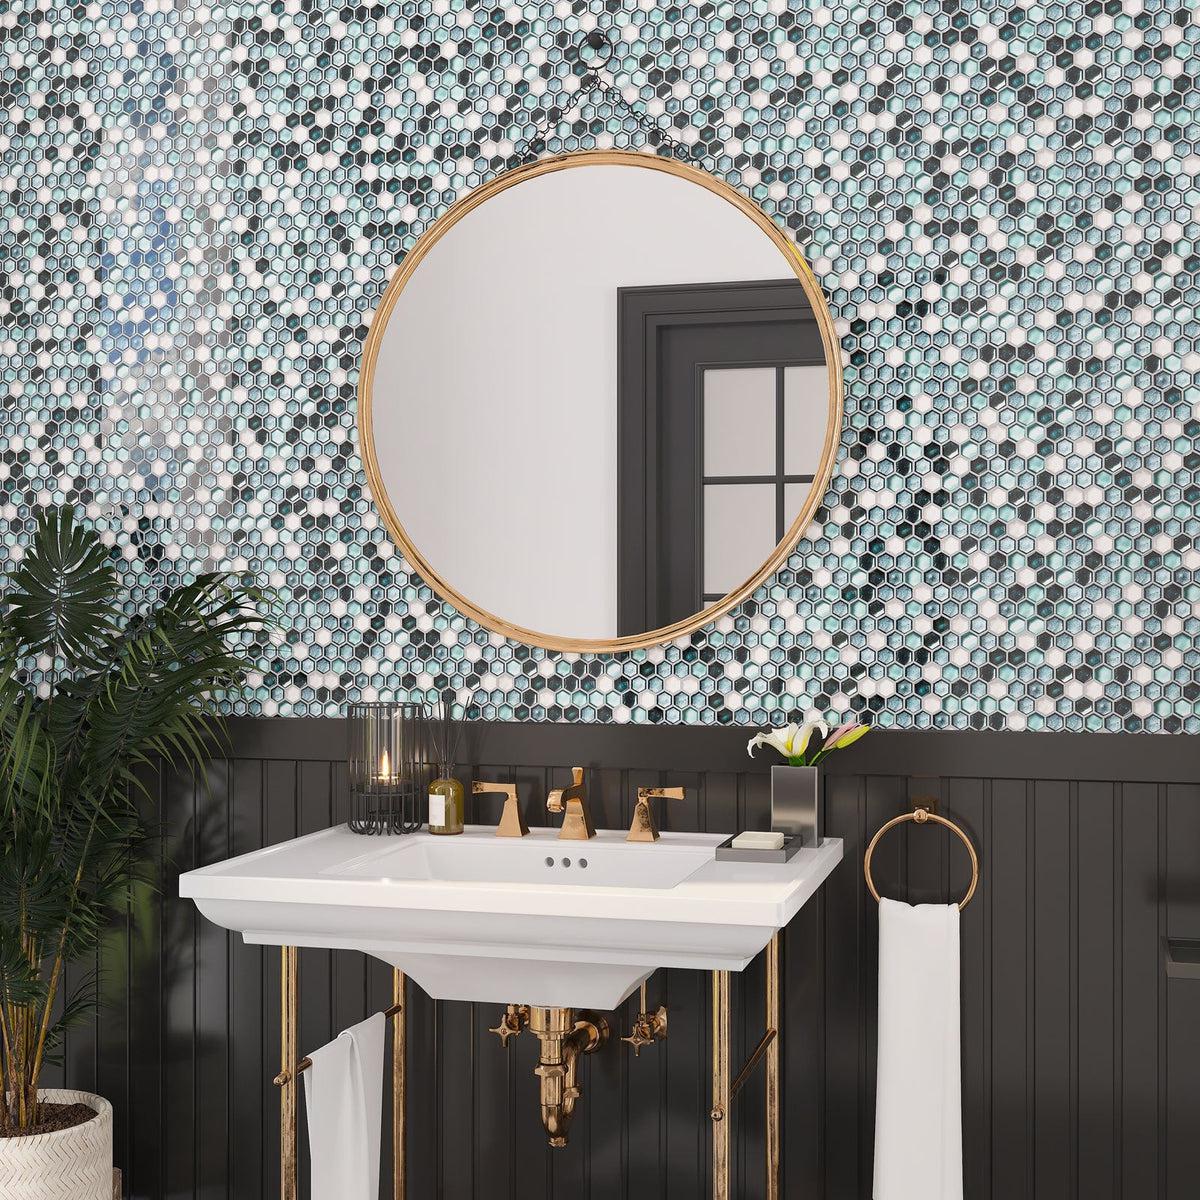 Bathroom of Black and Bronze with Emerald Hexagon Glass Mosaic Backsplash